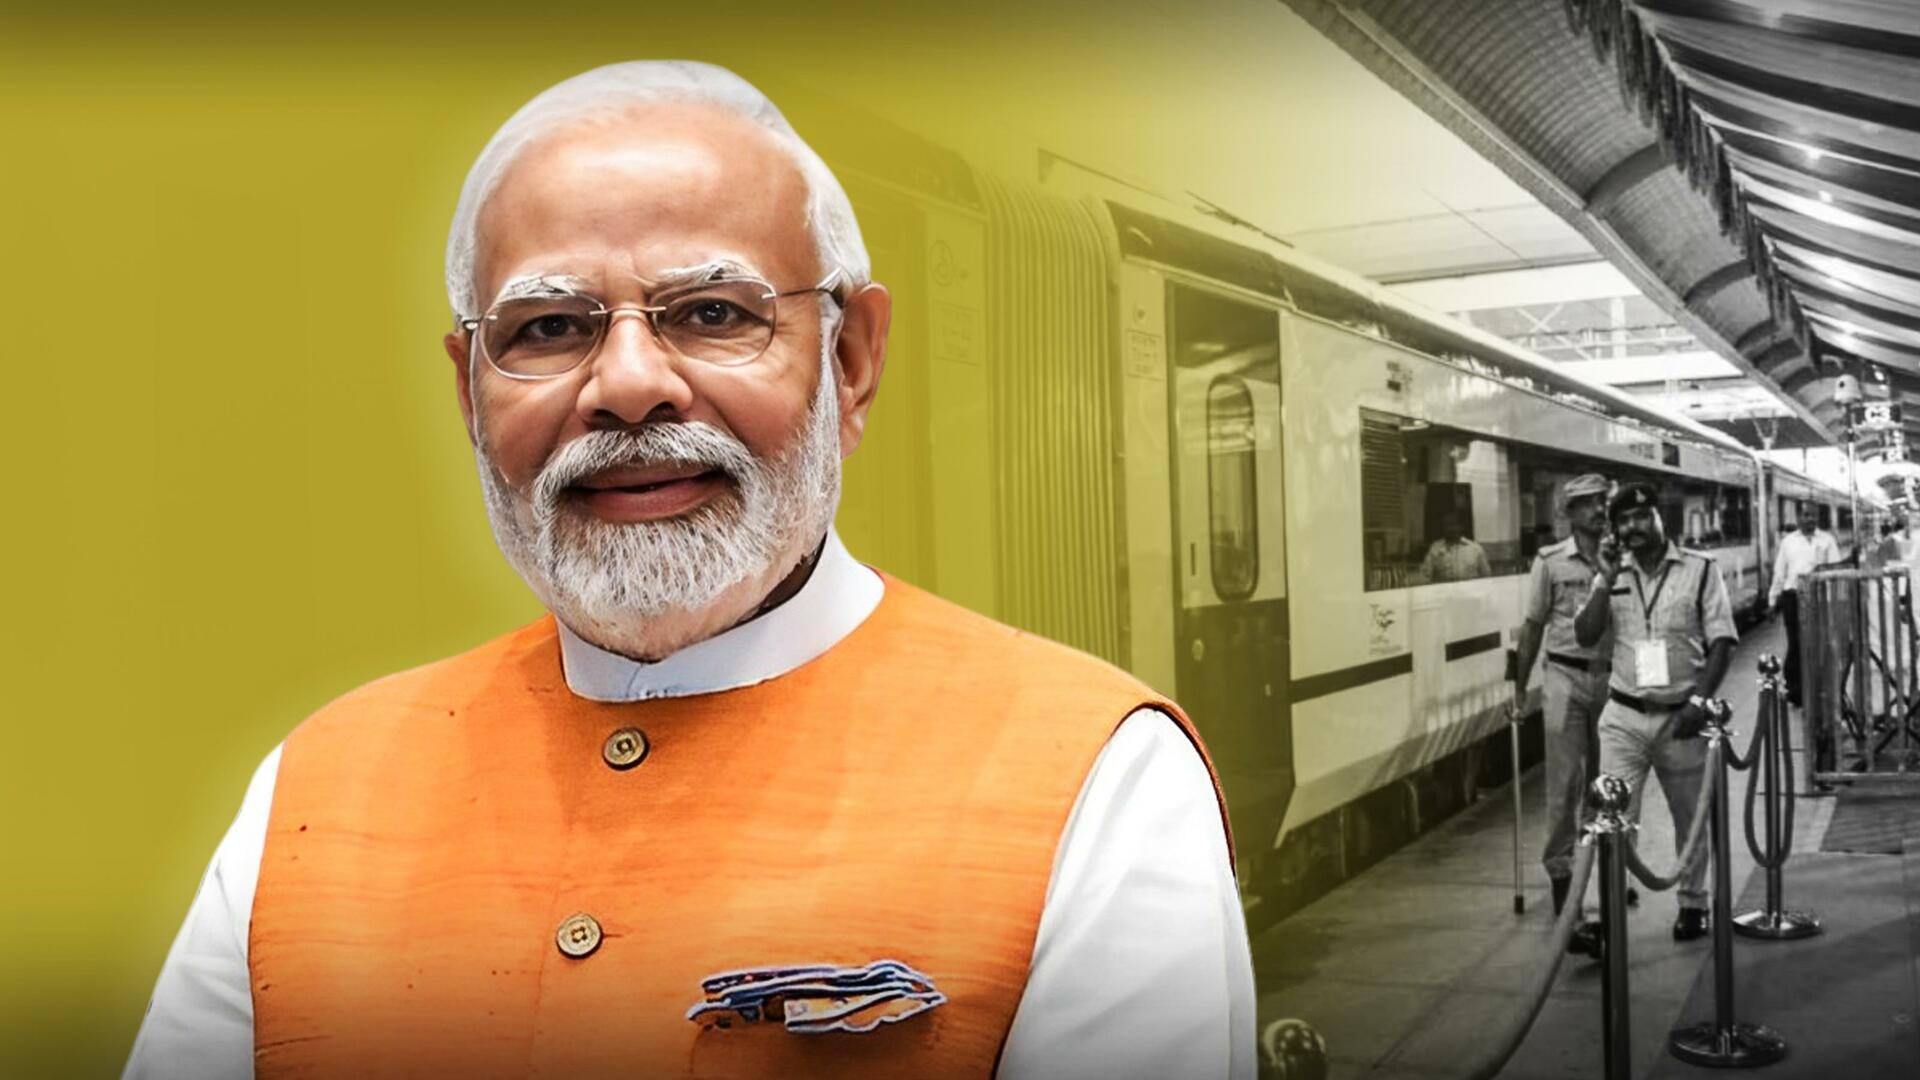 PM Modi: 508 రైల్వే స్టేషన్ల అభివృద్ధికి ప్రధాని నరేంద్ర మోదీ శంకుస్థాపన 